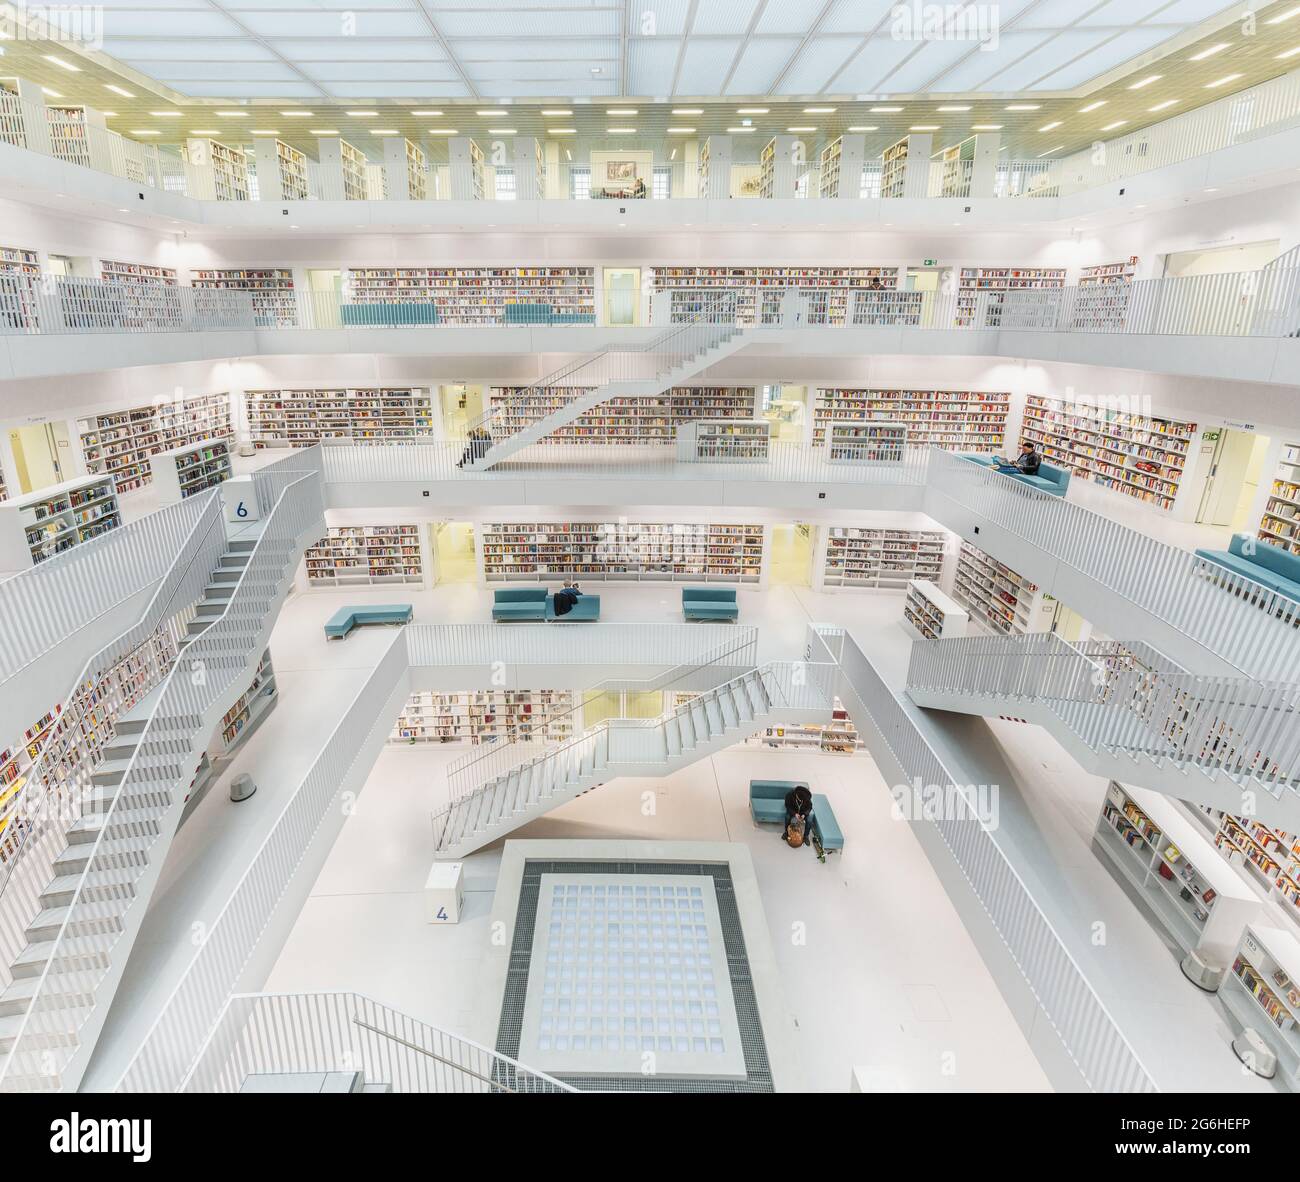 Biblioteca pubblica interna di Stoccarda (Stadtbibliothek Stuttgart) - Stoccarda, Germania Foto Stock